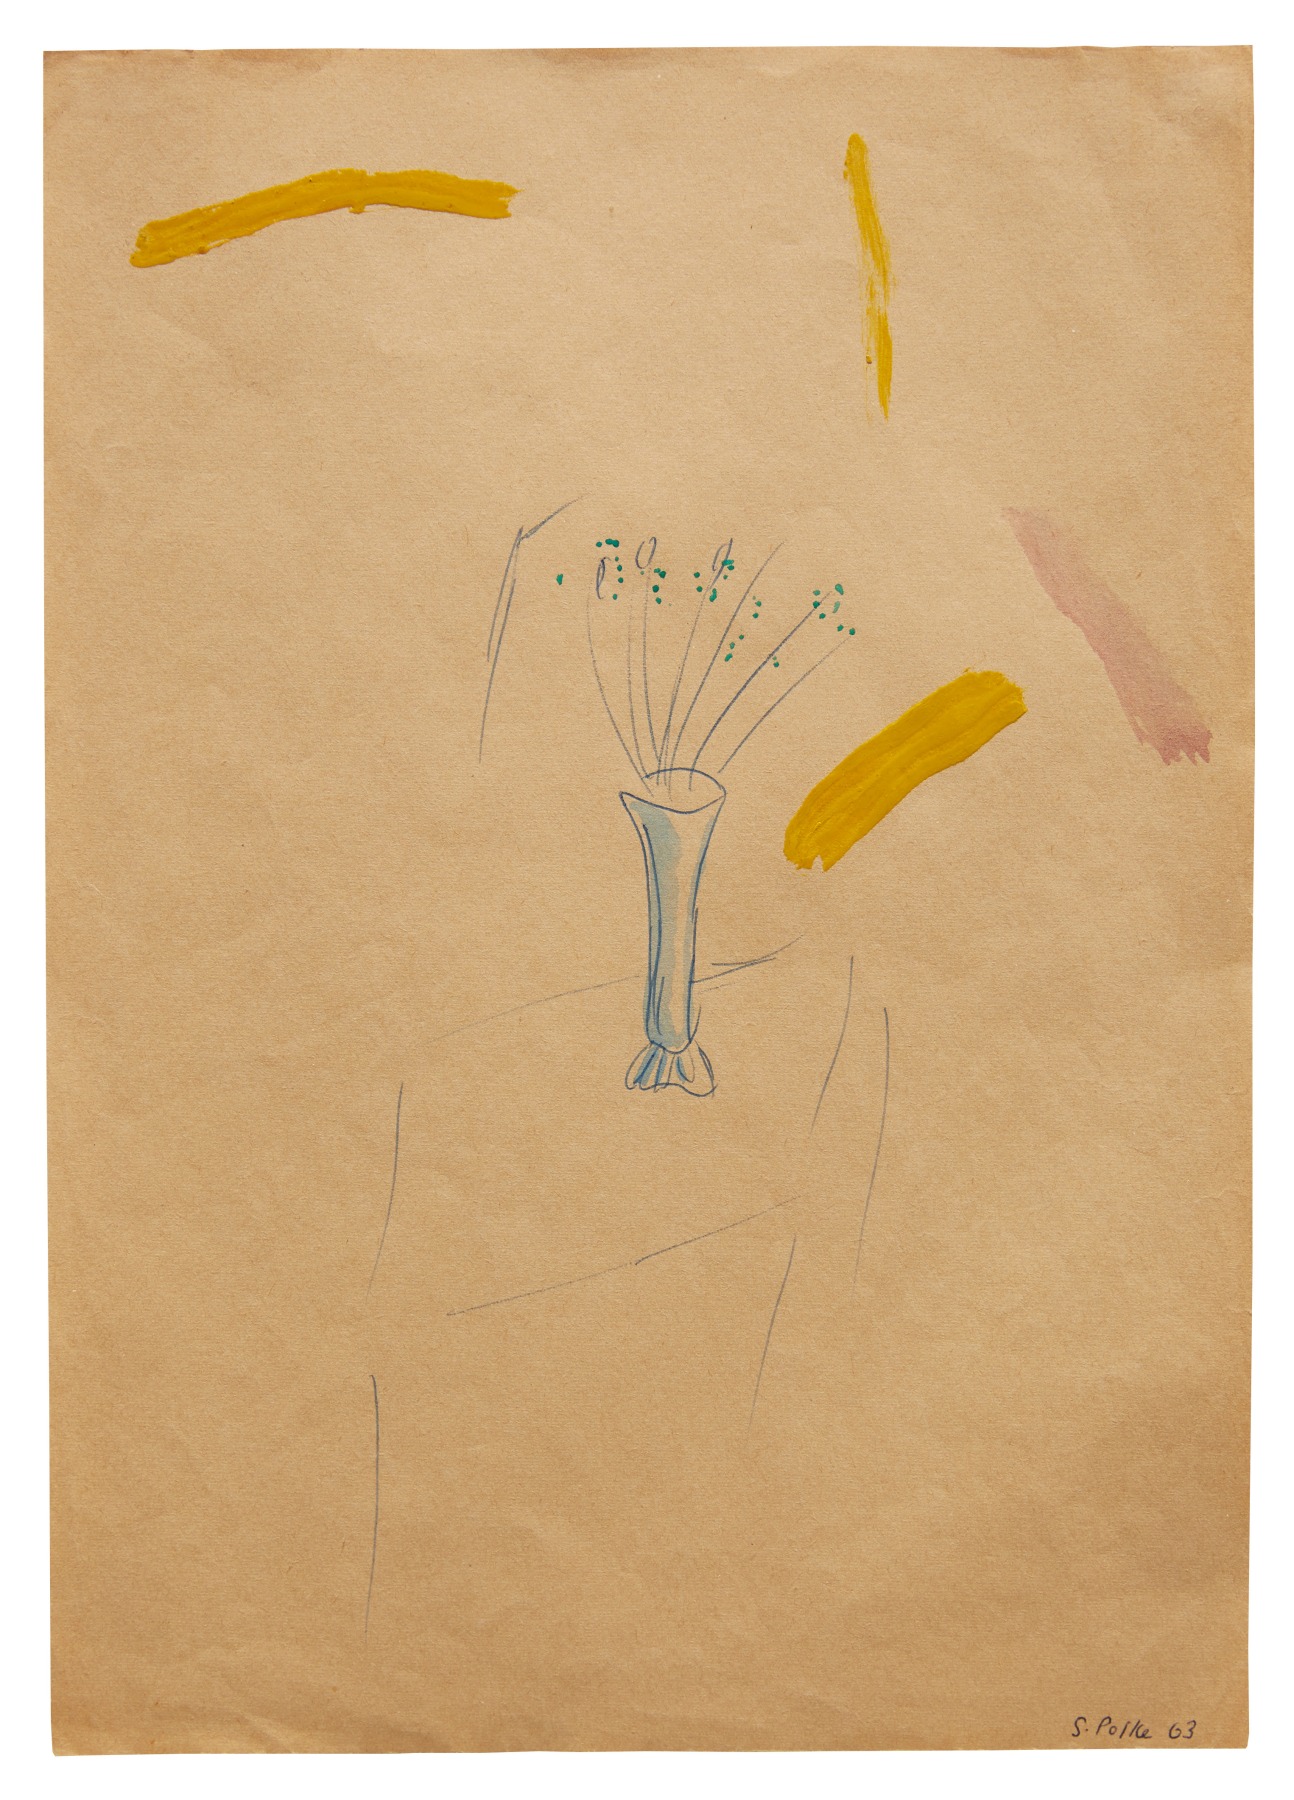 &ldquo;Untitled&rdquo;, 1963 Ballpoint pen, gouache, colored lacquer on paper